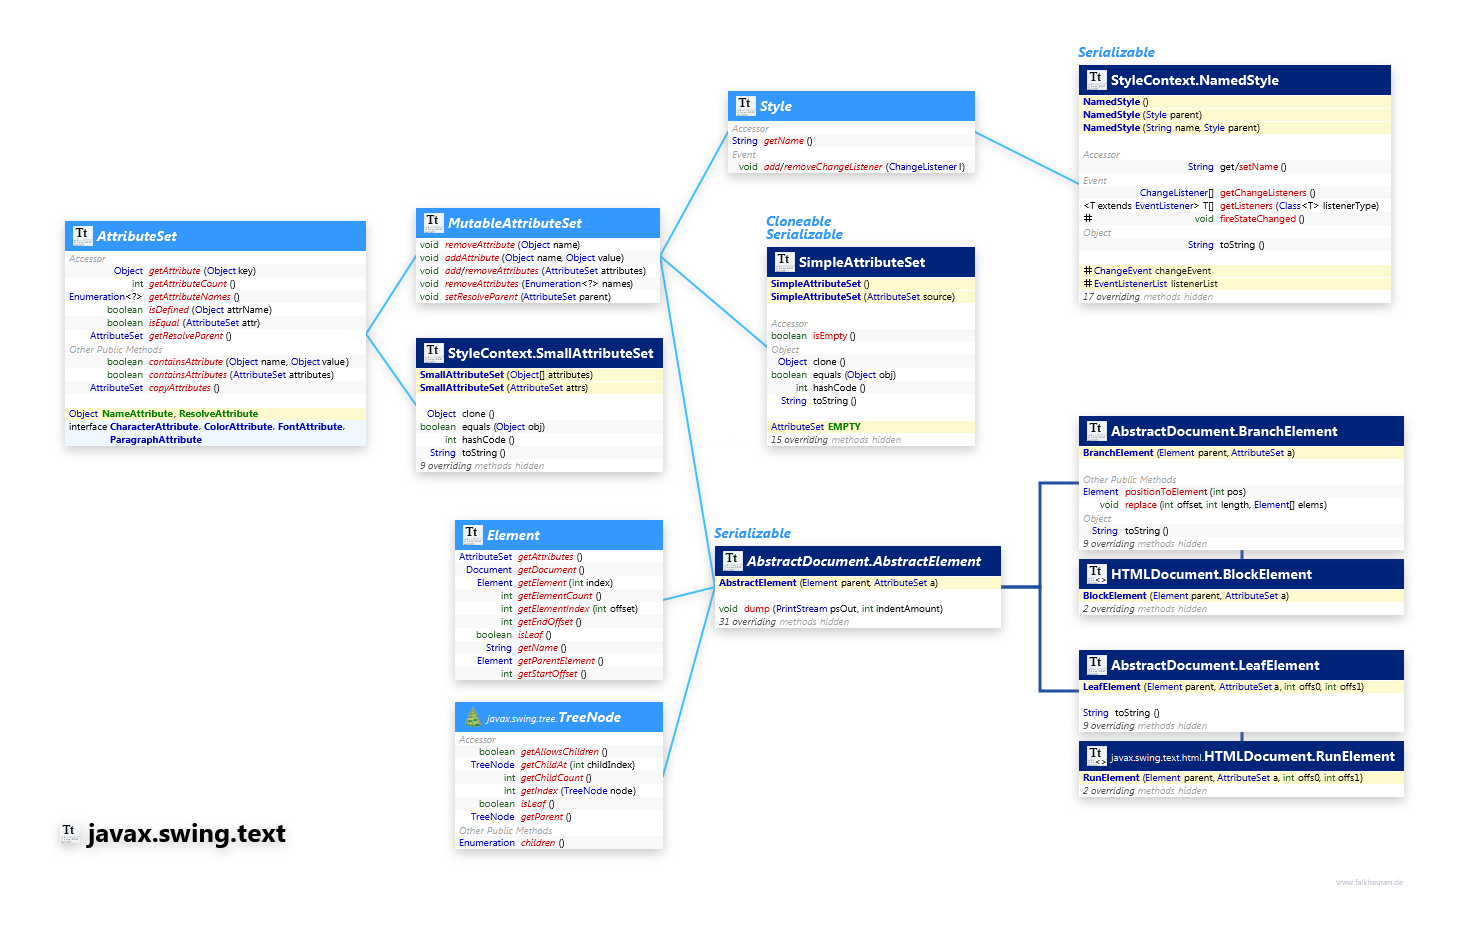 javax.swing.text AttributeSet, Element class diagram and api documentation for Java 8